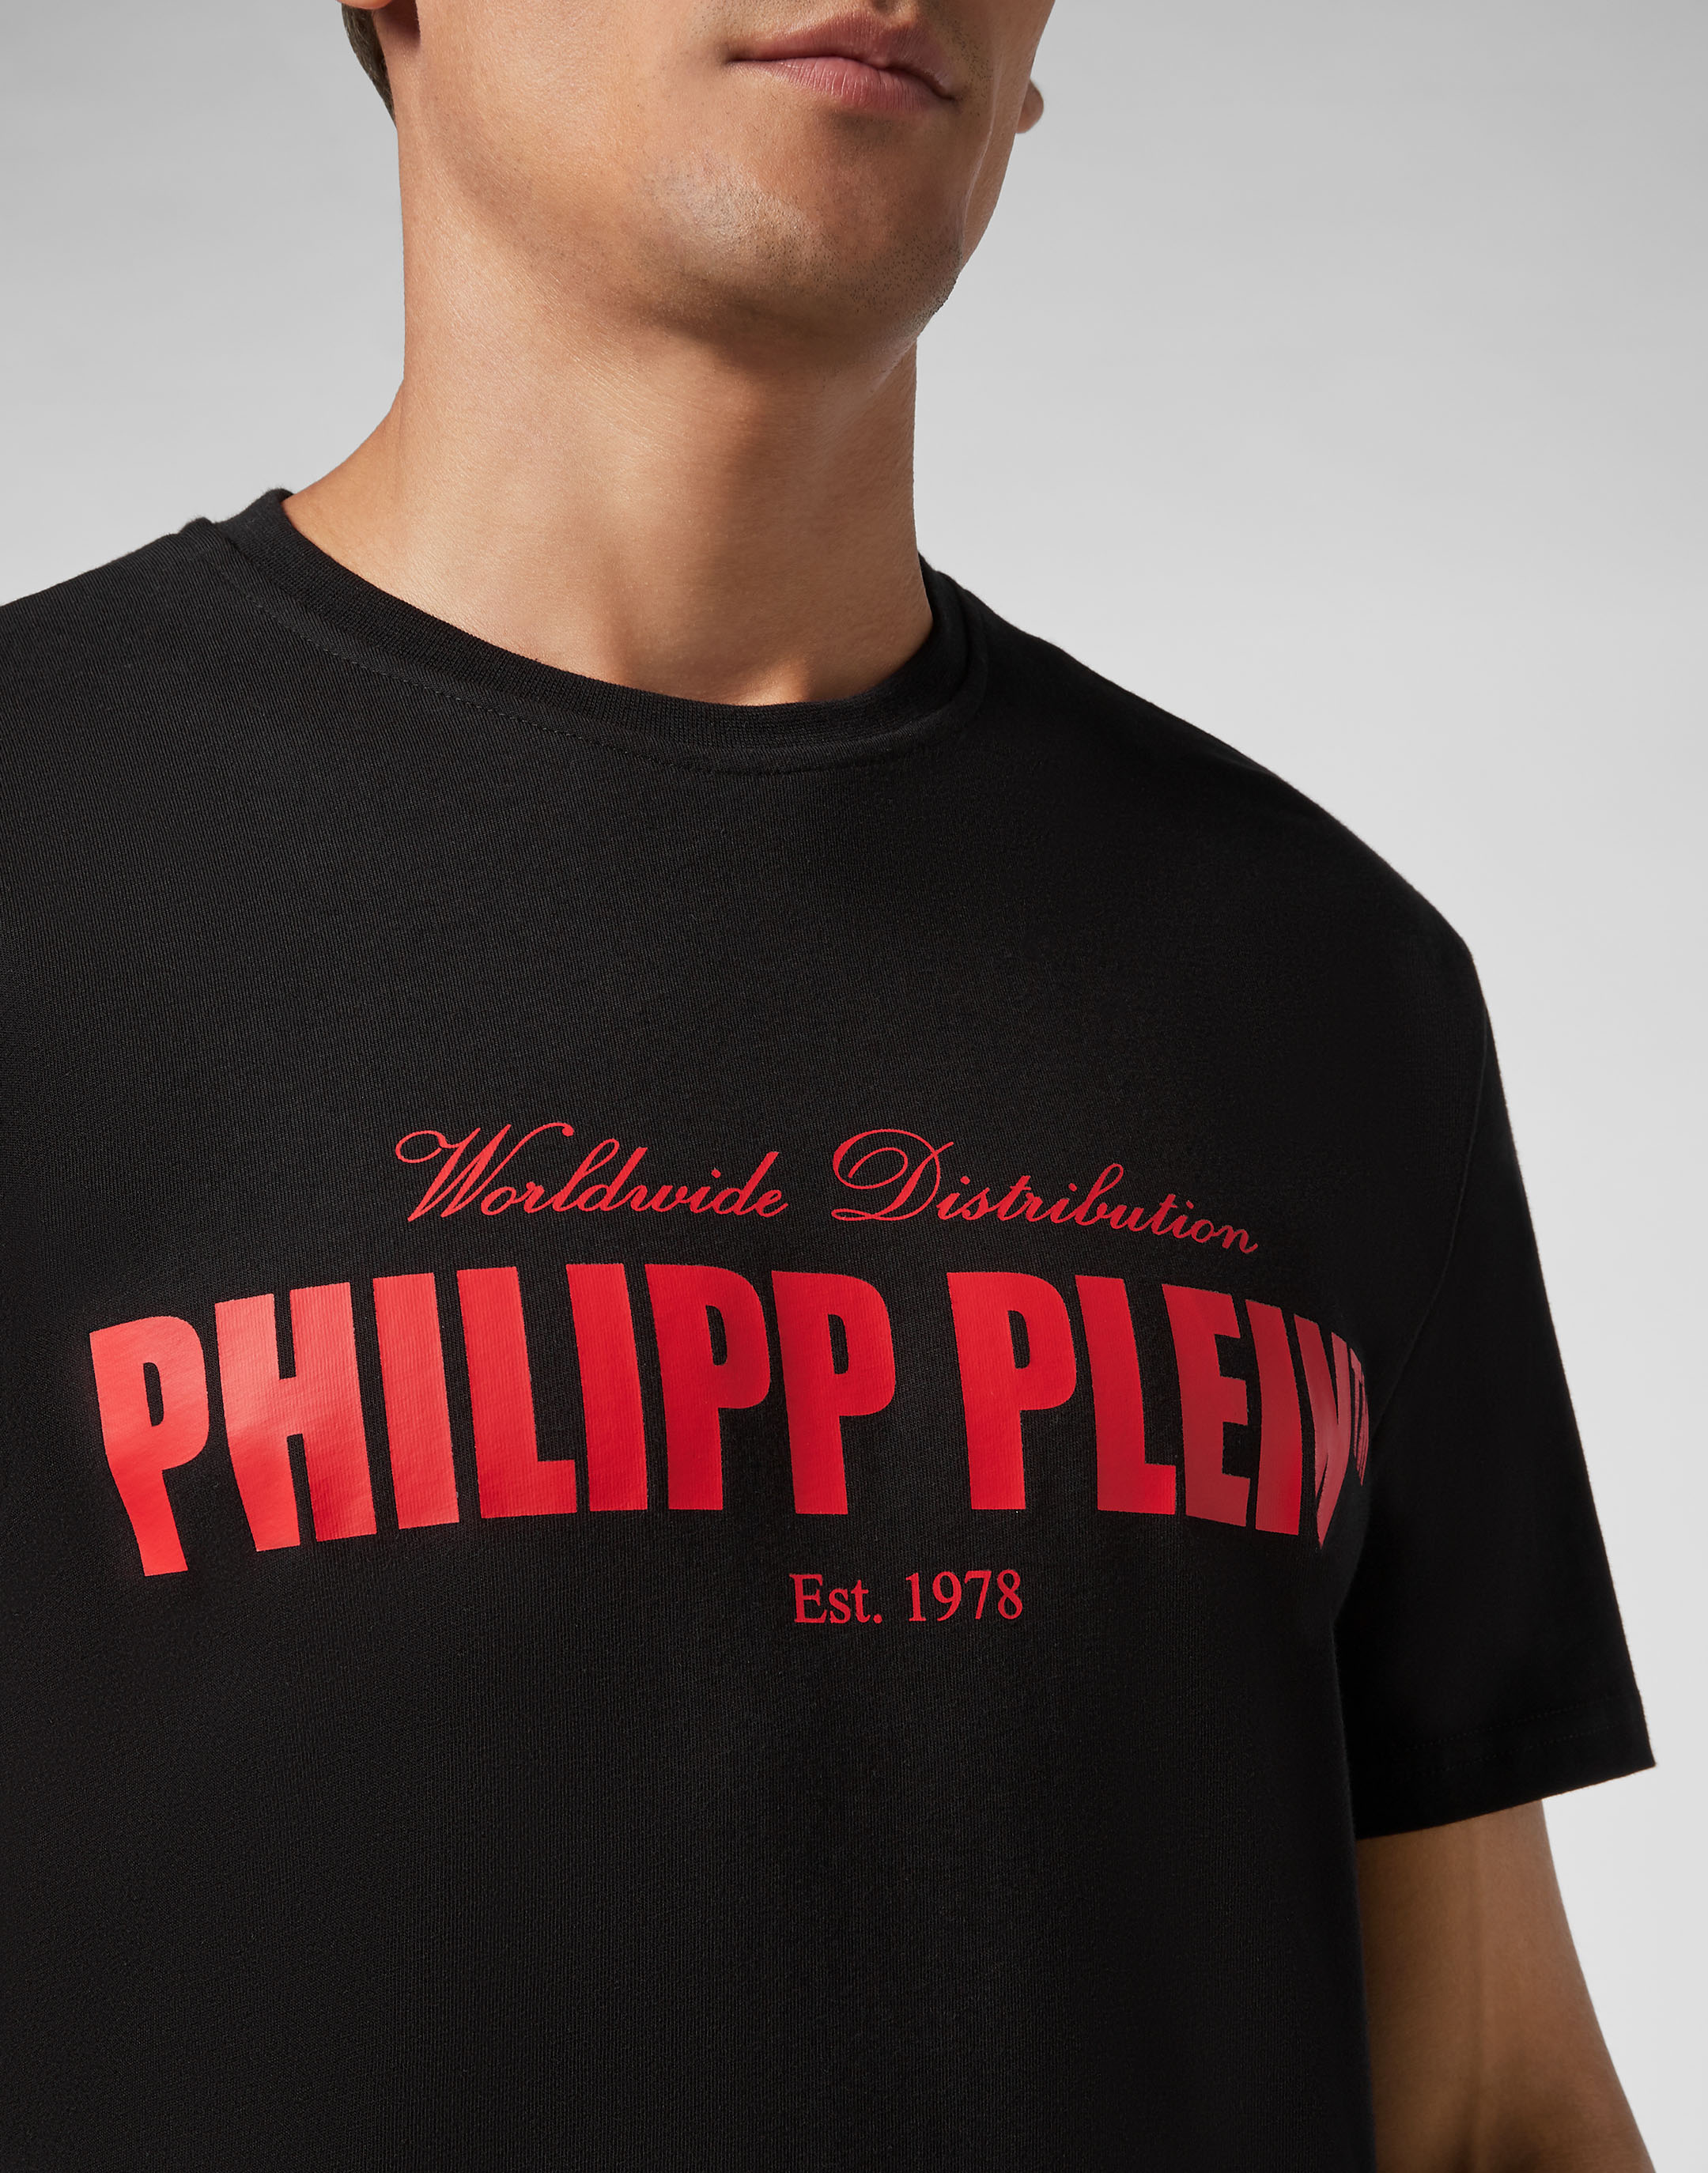 philipp plein t shirt red